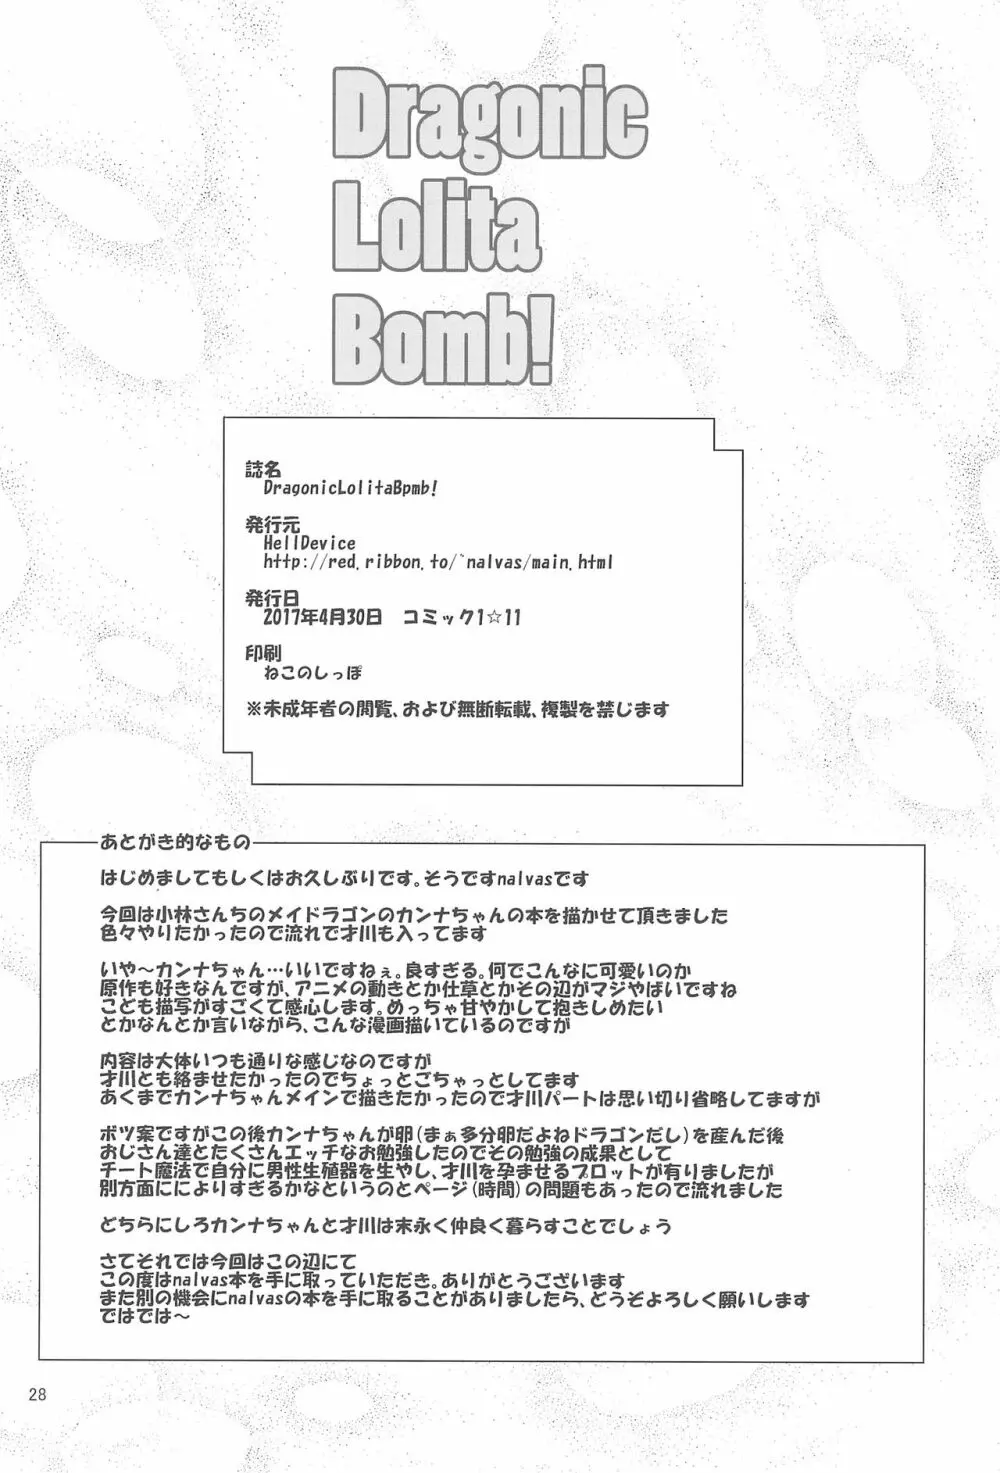 Dragonic Lolita Bomb! - page28